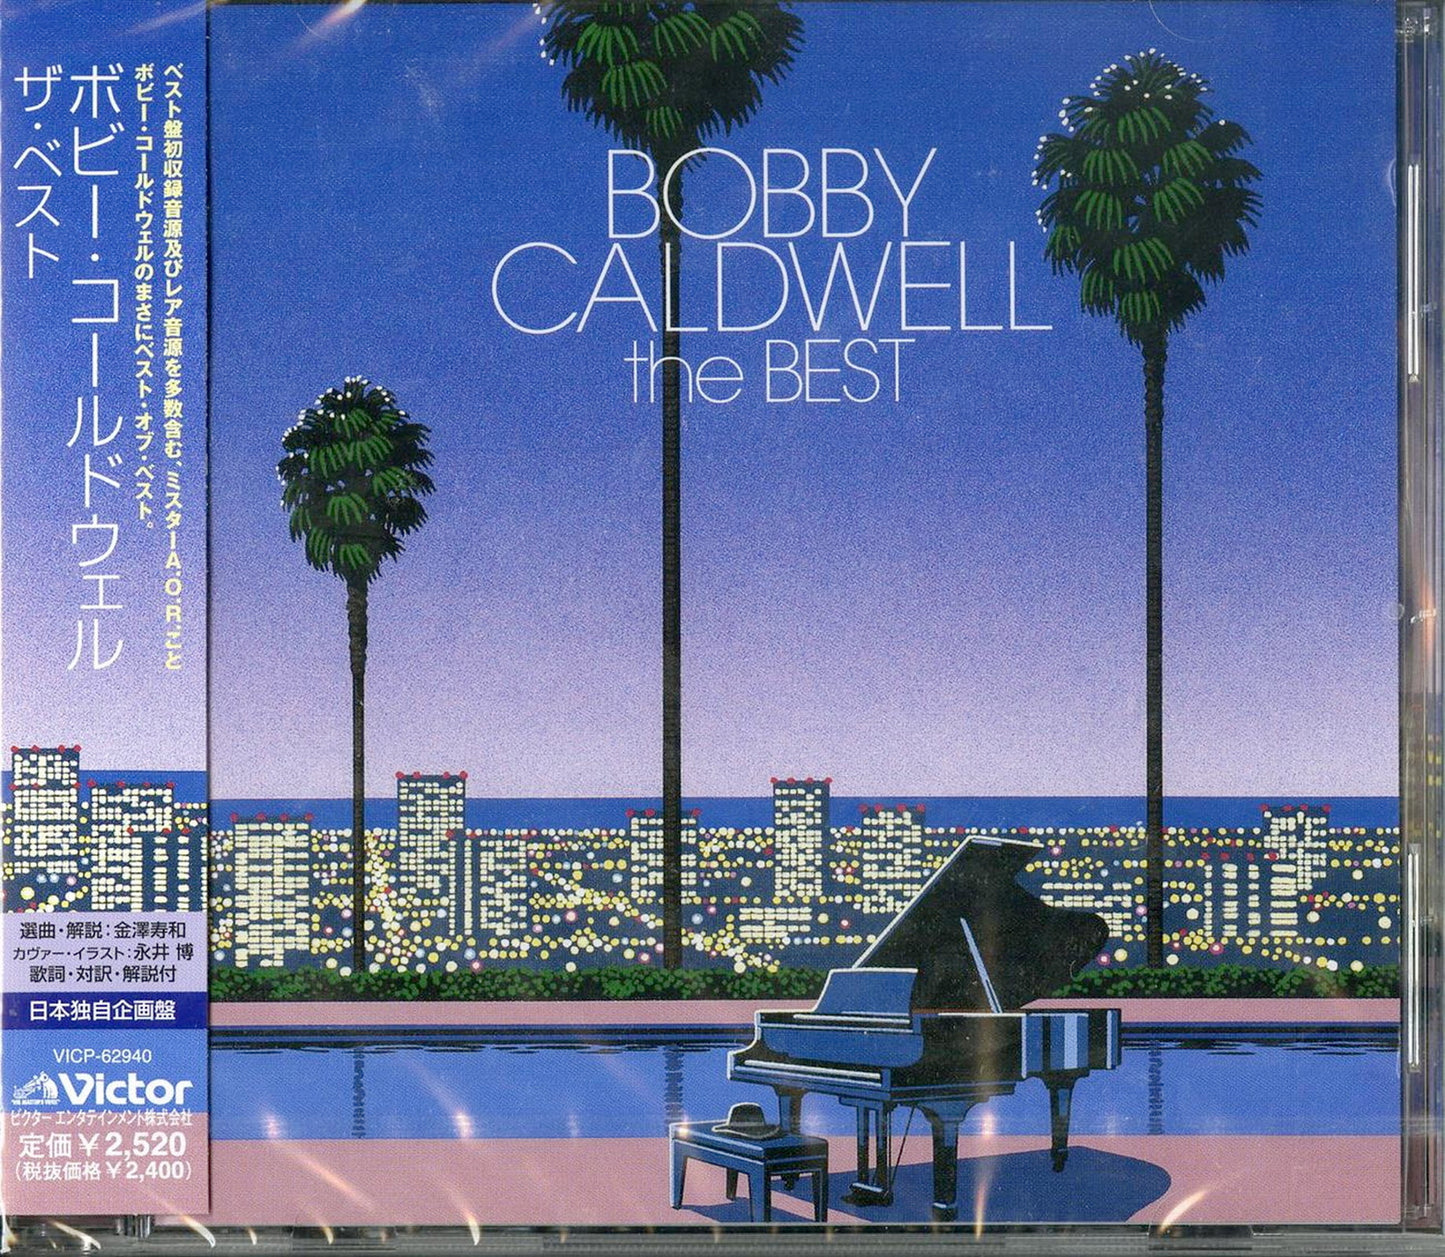 Bobby Caldwell - Bobby Caldwell The Best - Japan CD